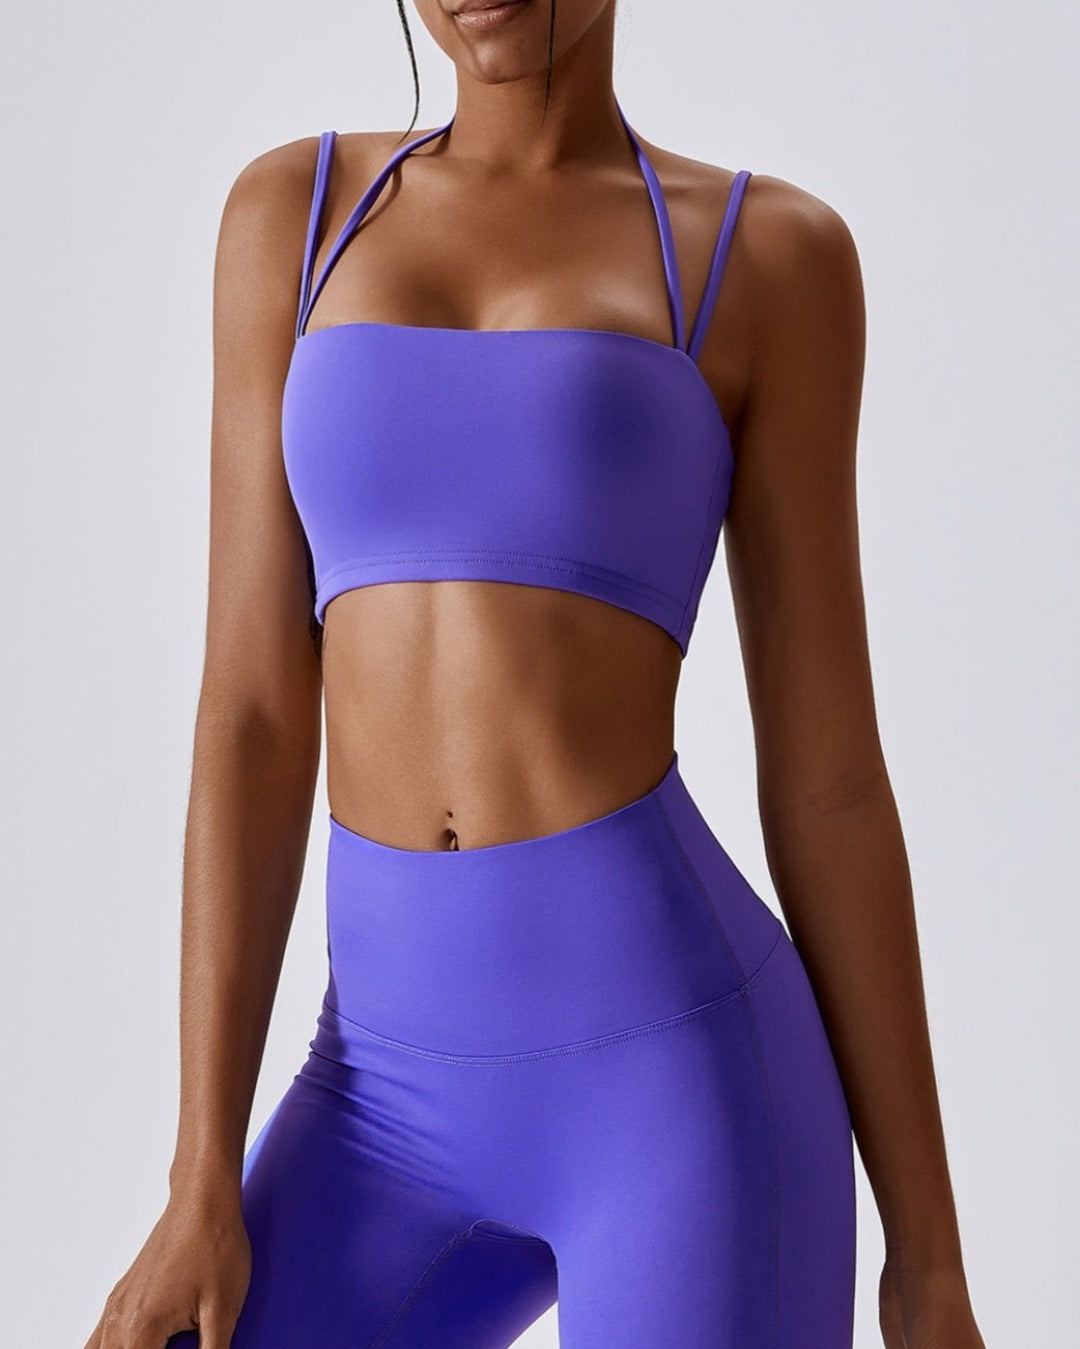 double straps sports bra - purple